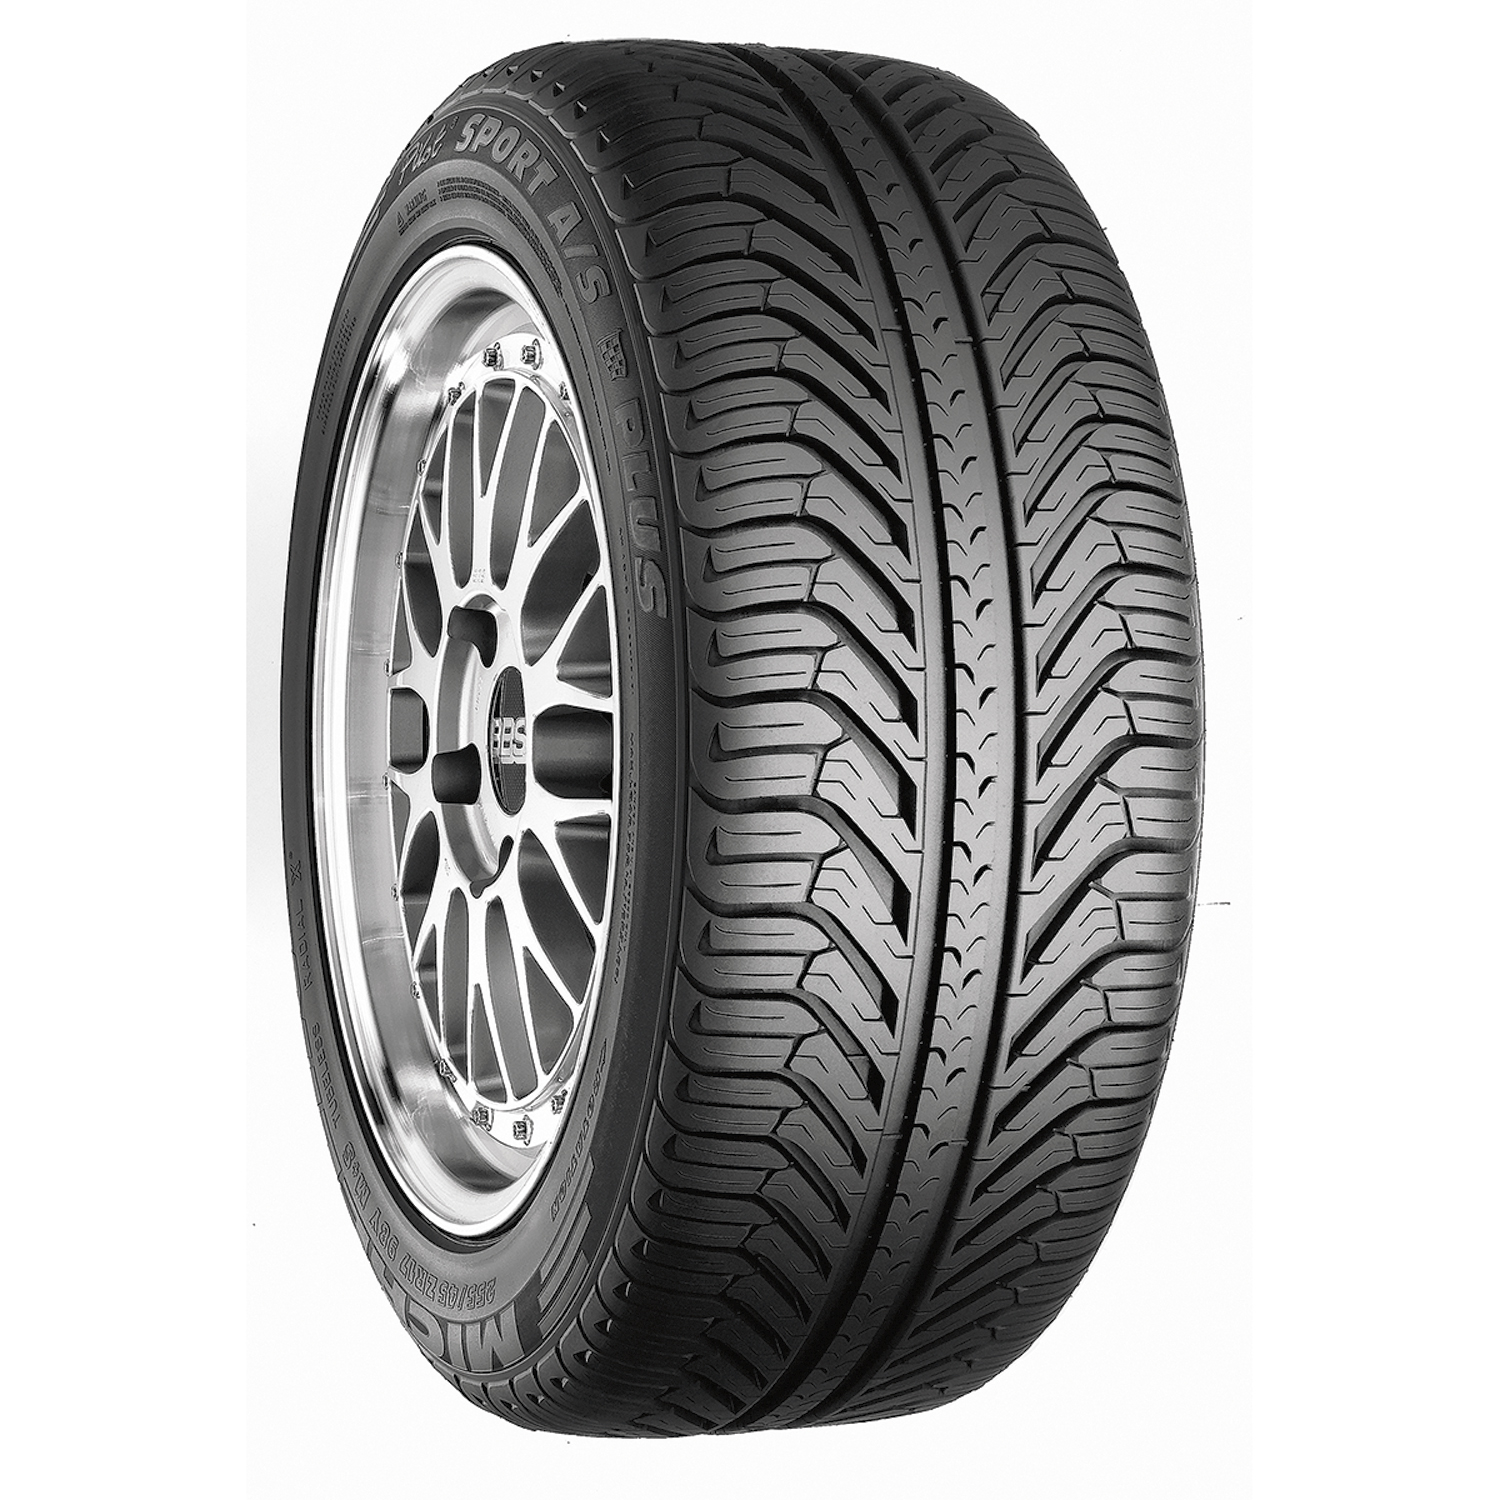 Michelin Pilot Sport A/S Plus - 205/55ZR16 91Y - All Season Tire